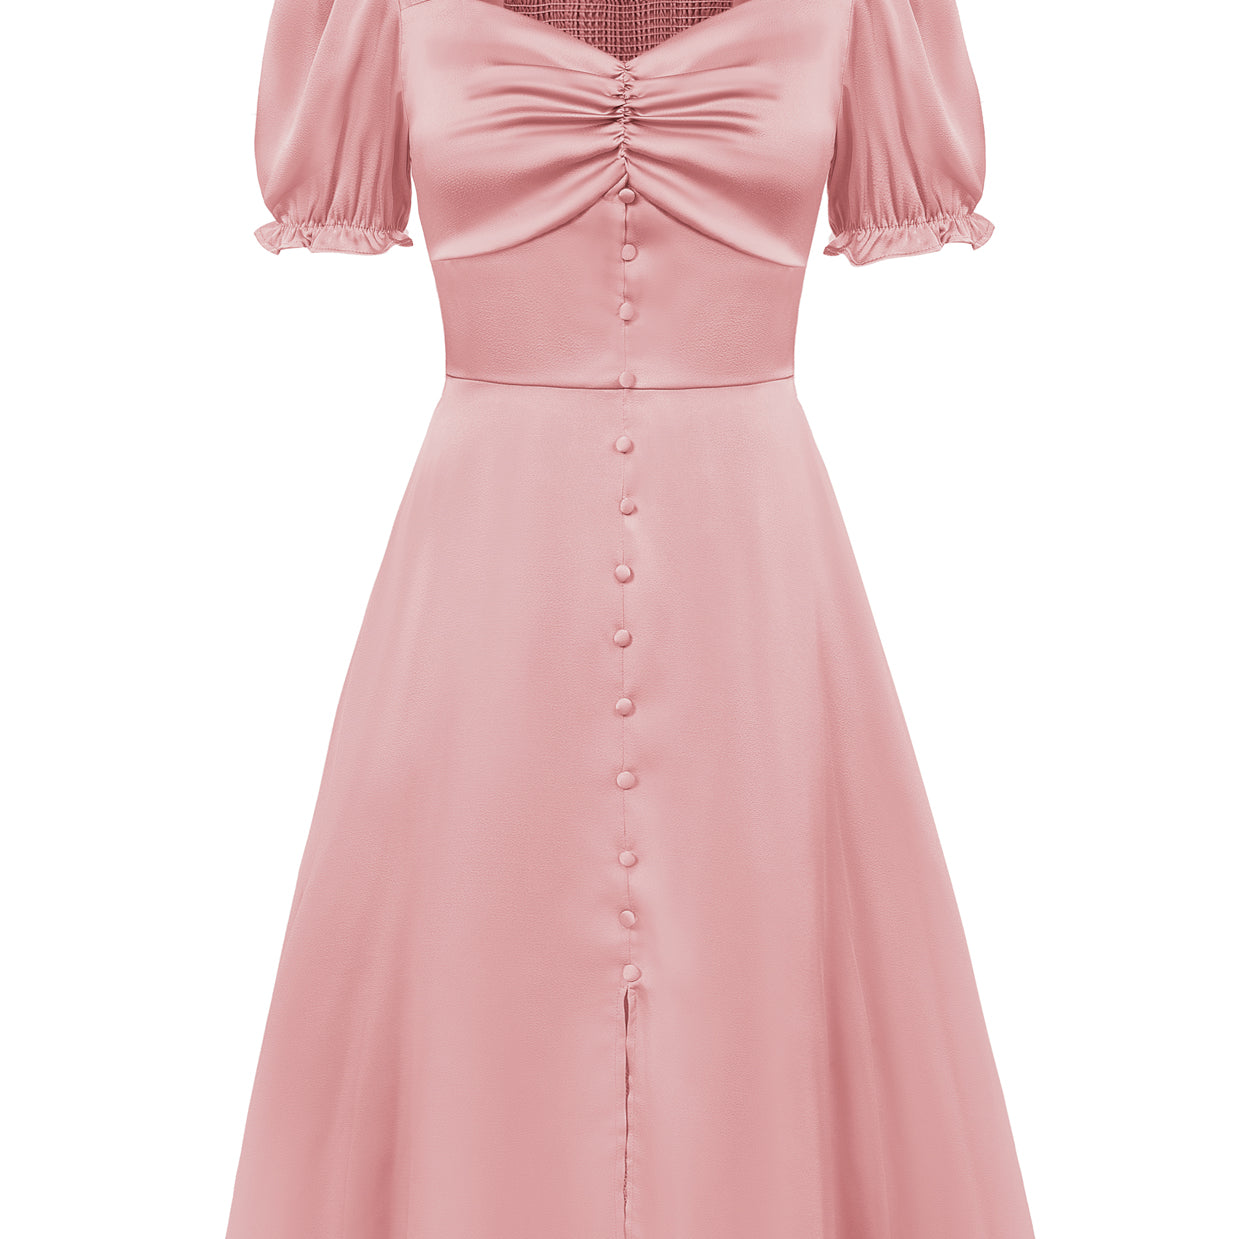 Summer Puff Short Sleeve Cottagecore Dress Vintage 1950s Party Swing Dresses